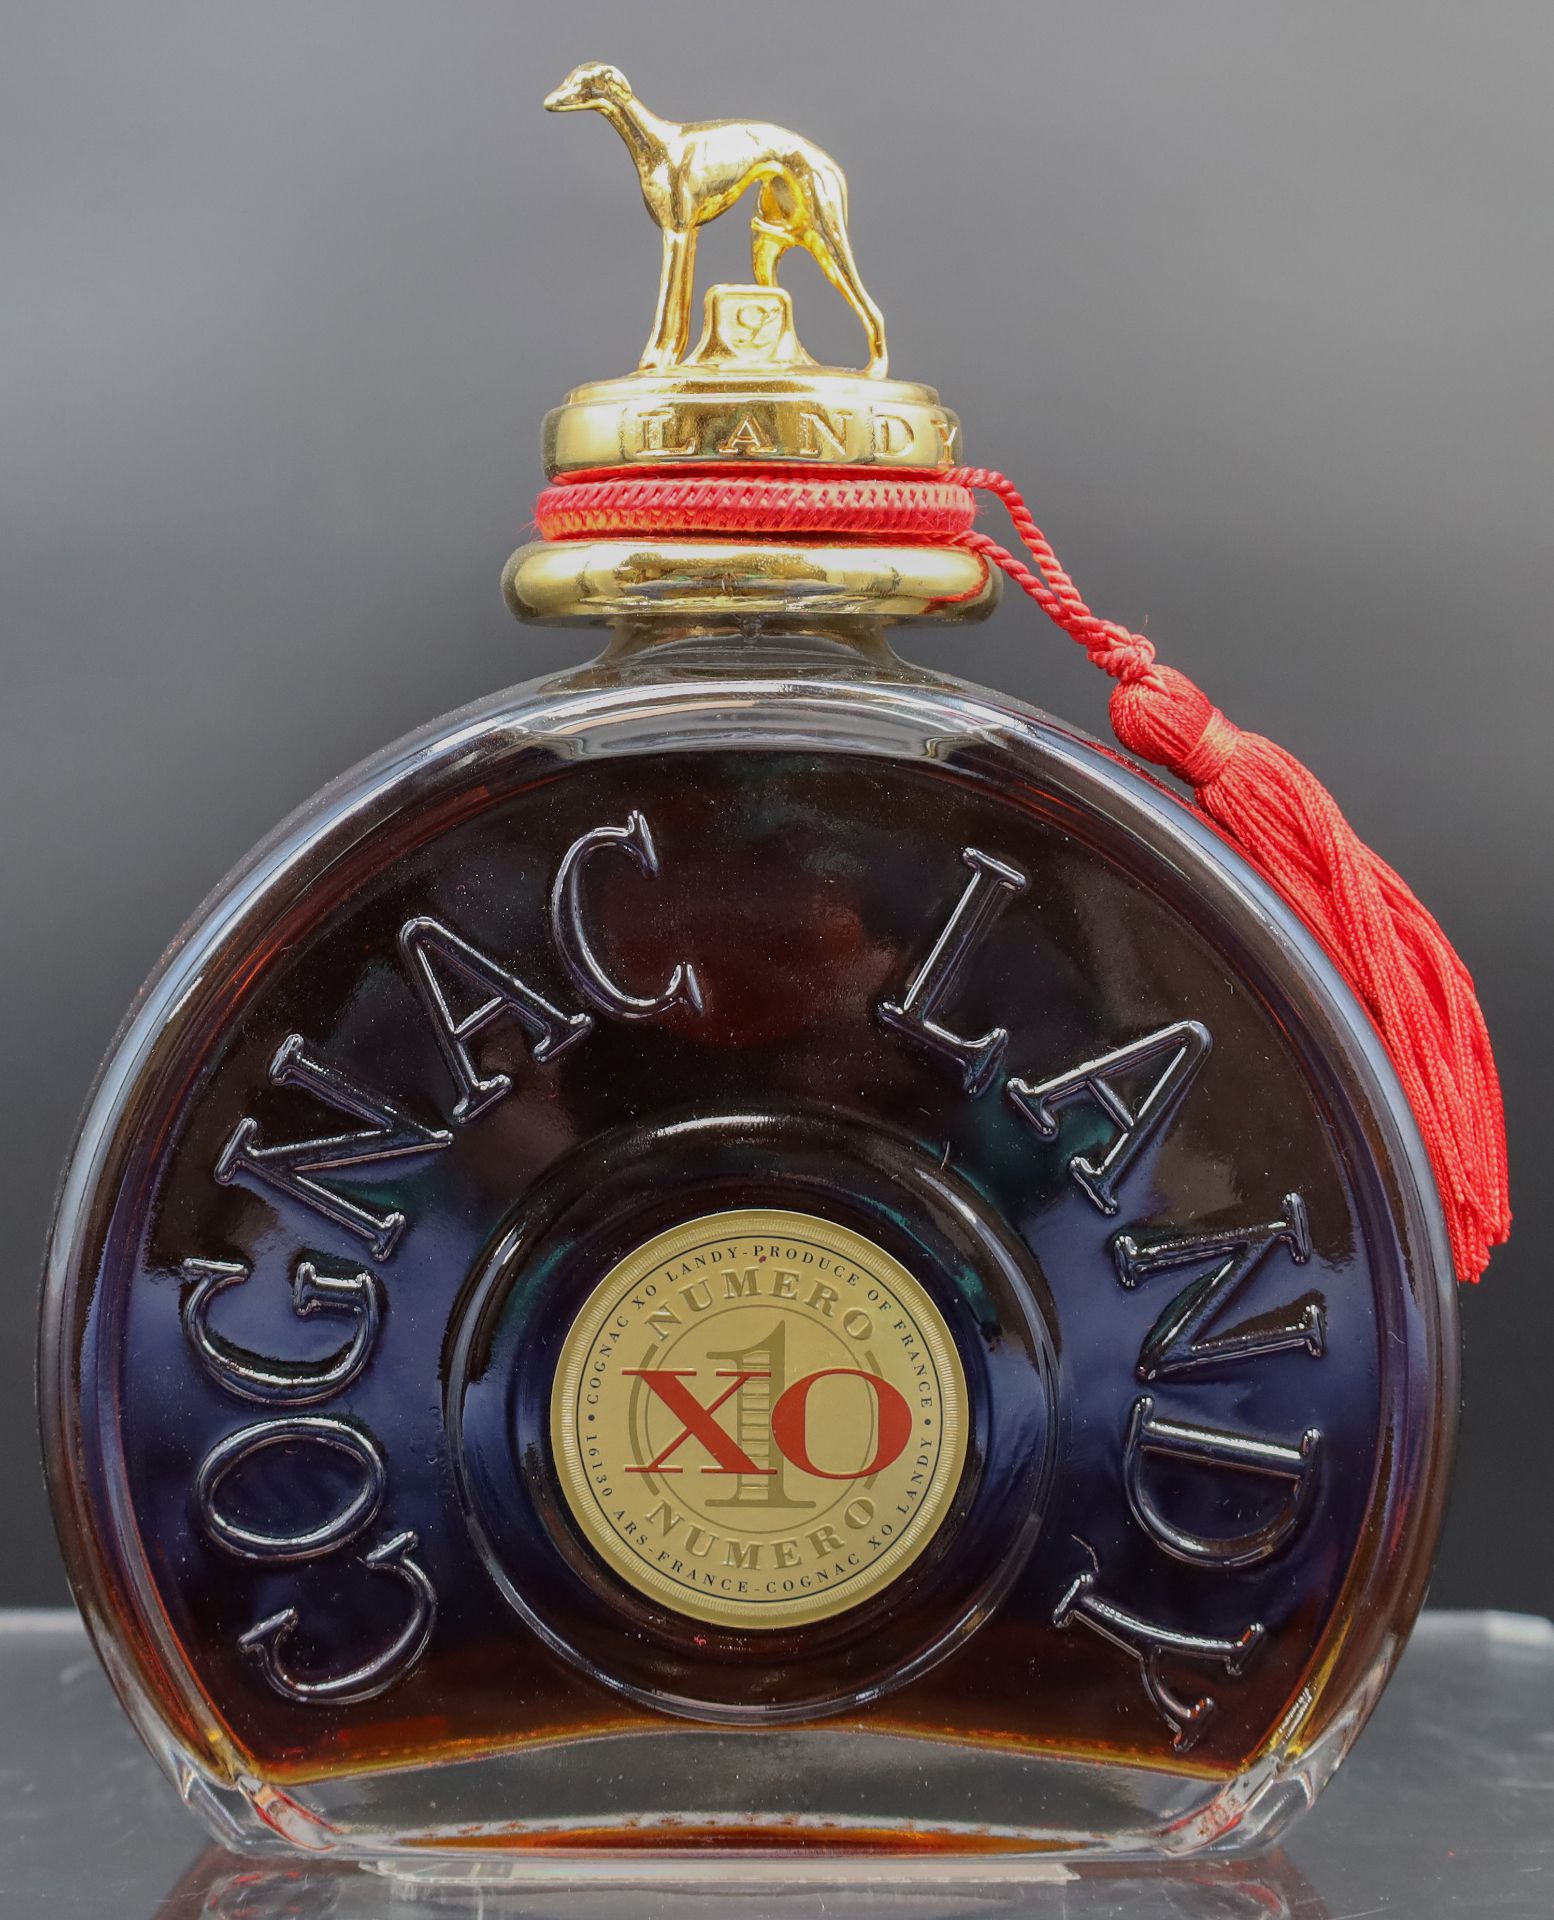 1 bottle of cognac. LANDY. XO No. 1. France. - Image 2 of 7